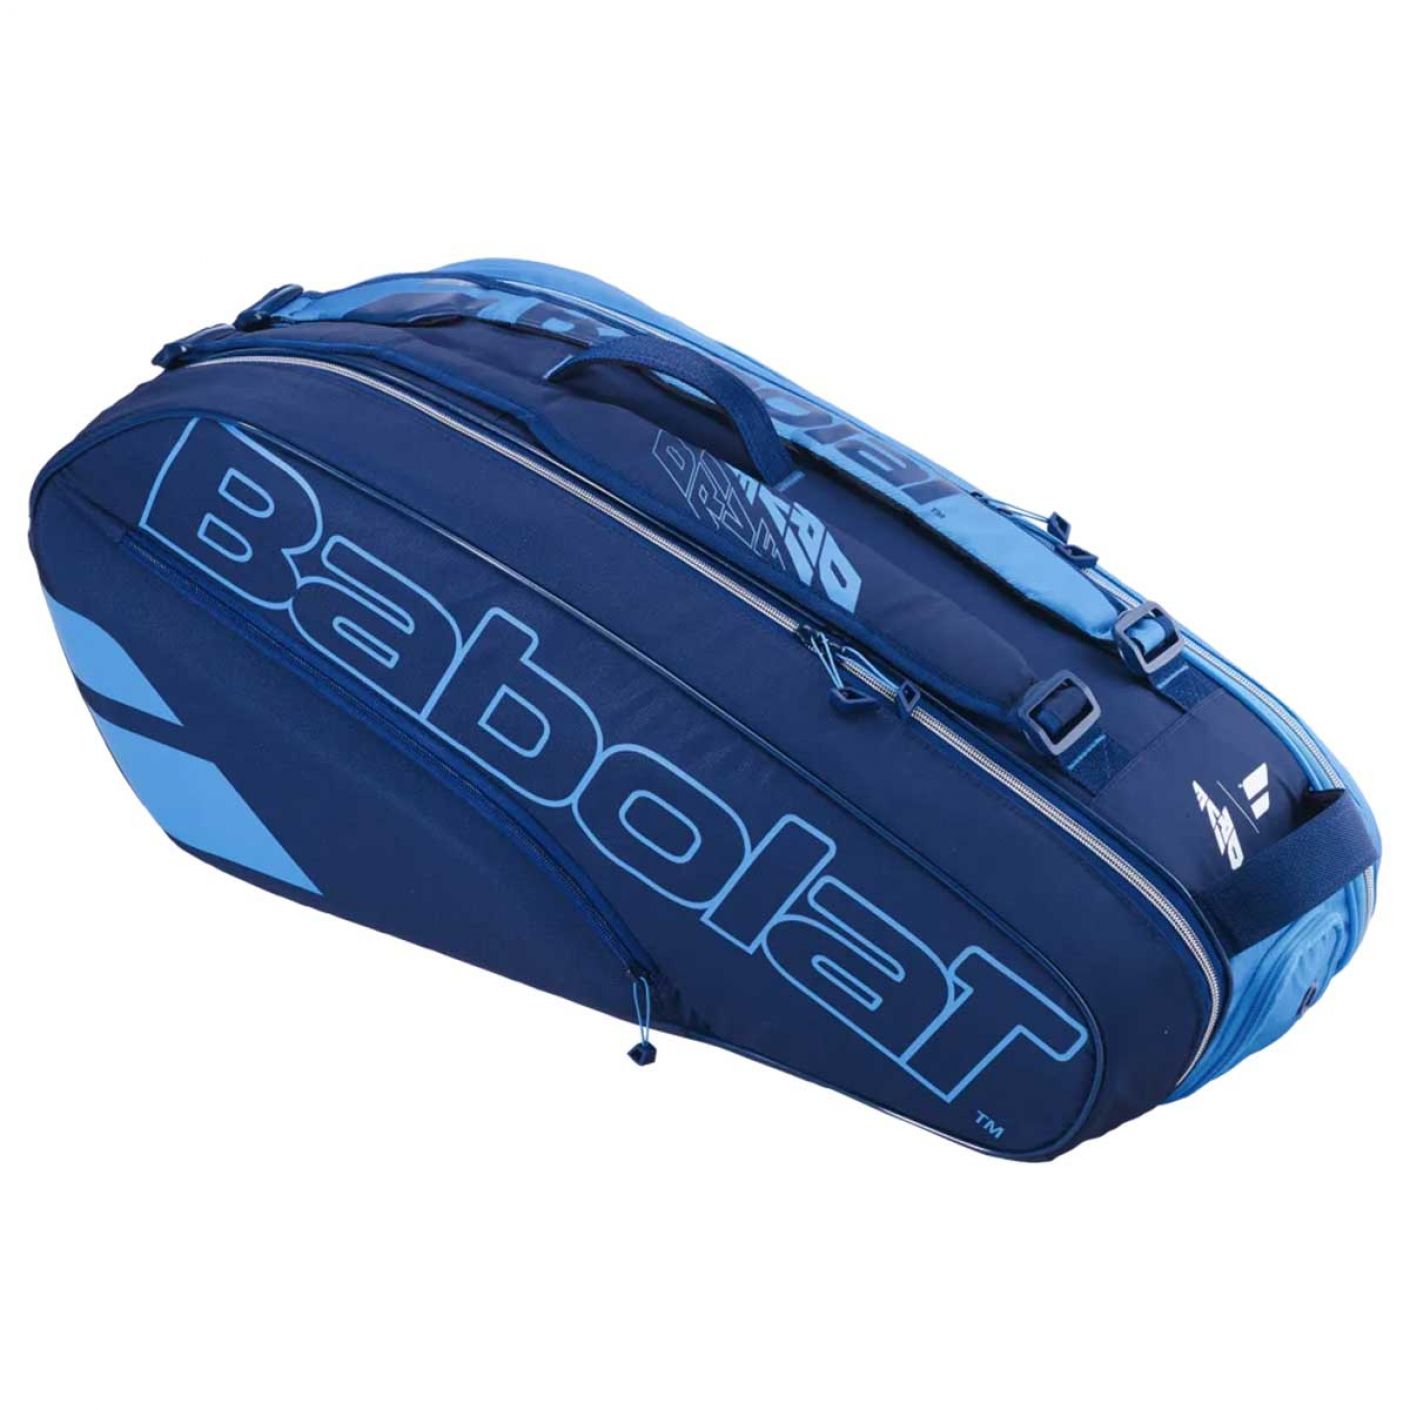 Babolat Borsone Tennis Rh X 6 Pure Drive